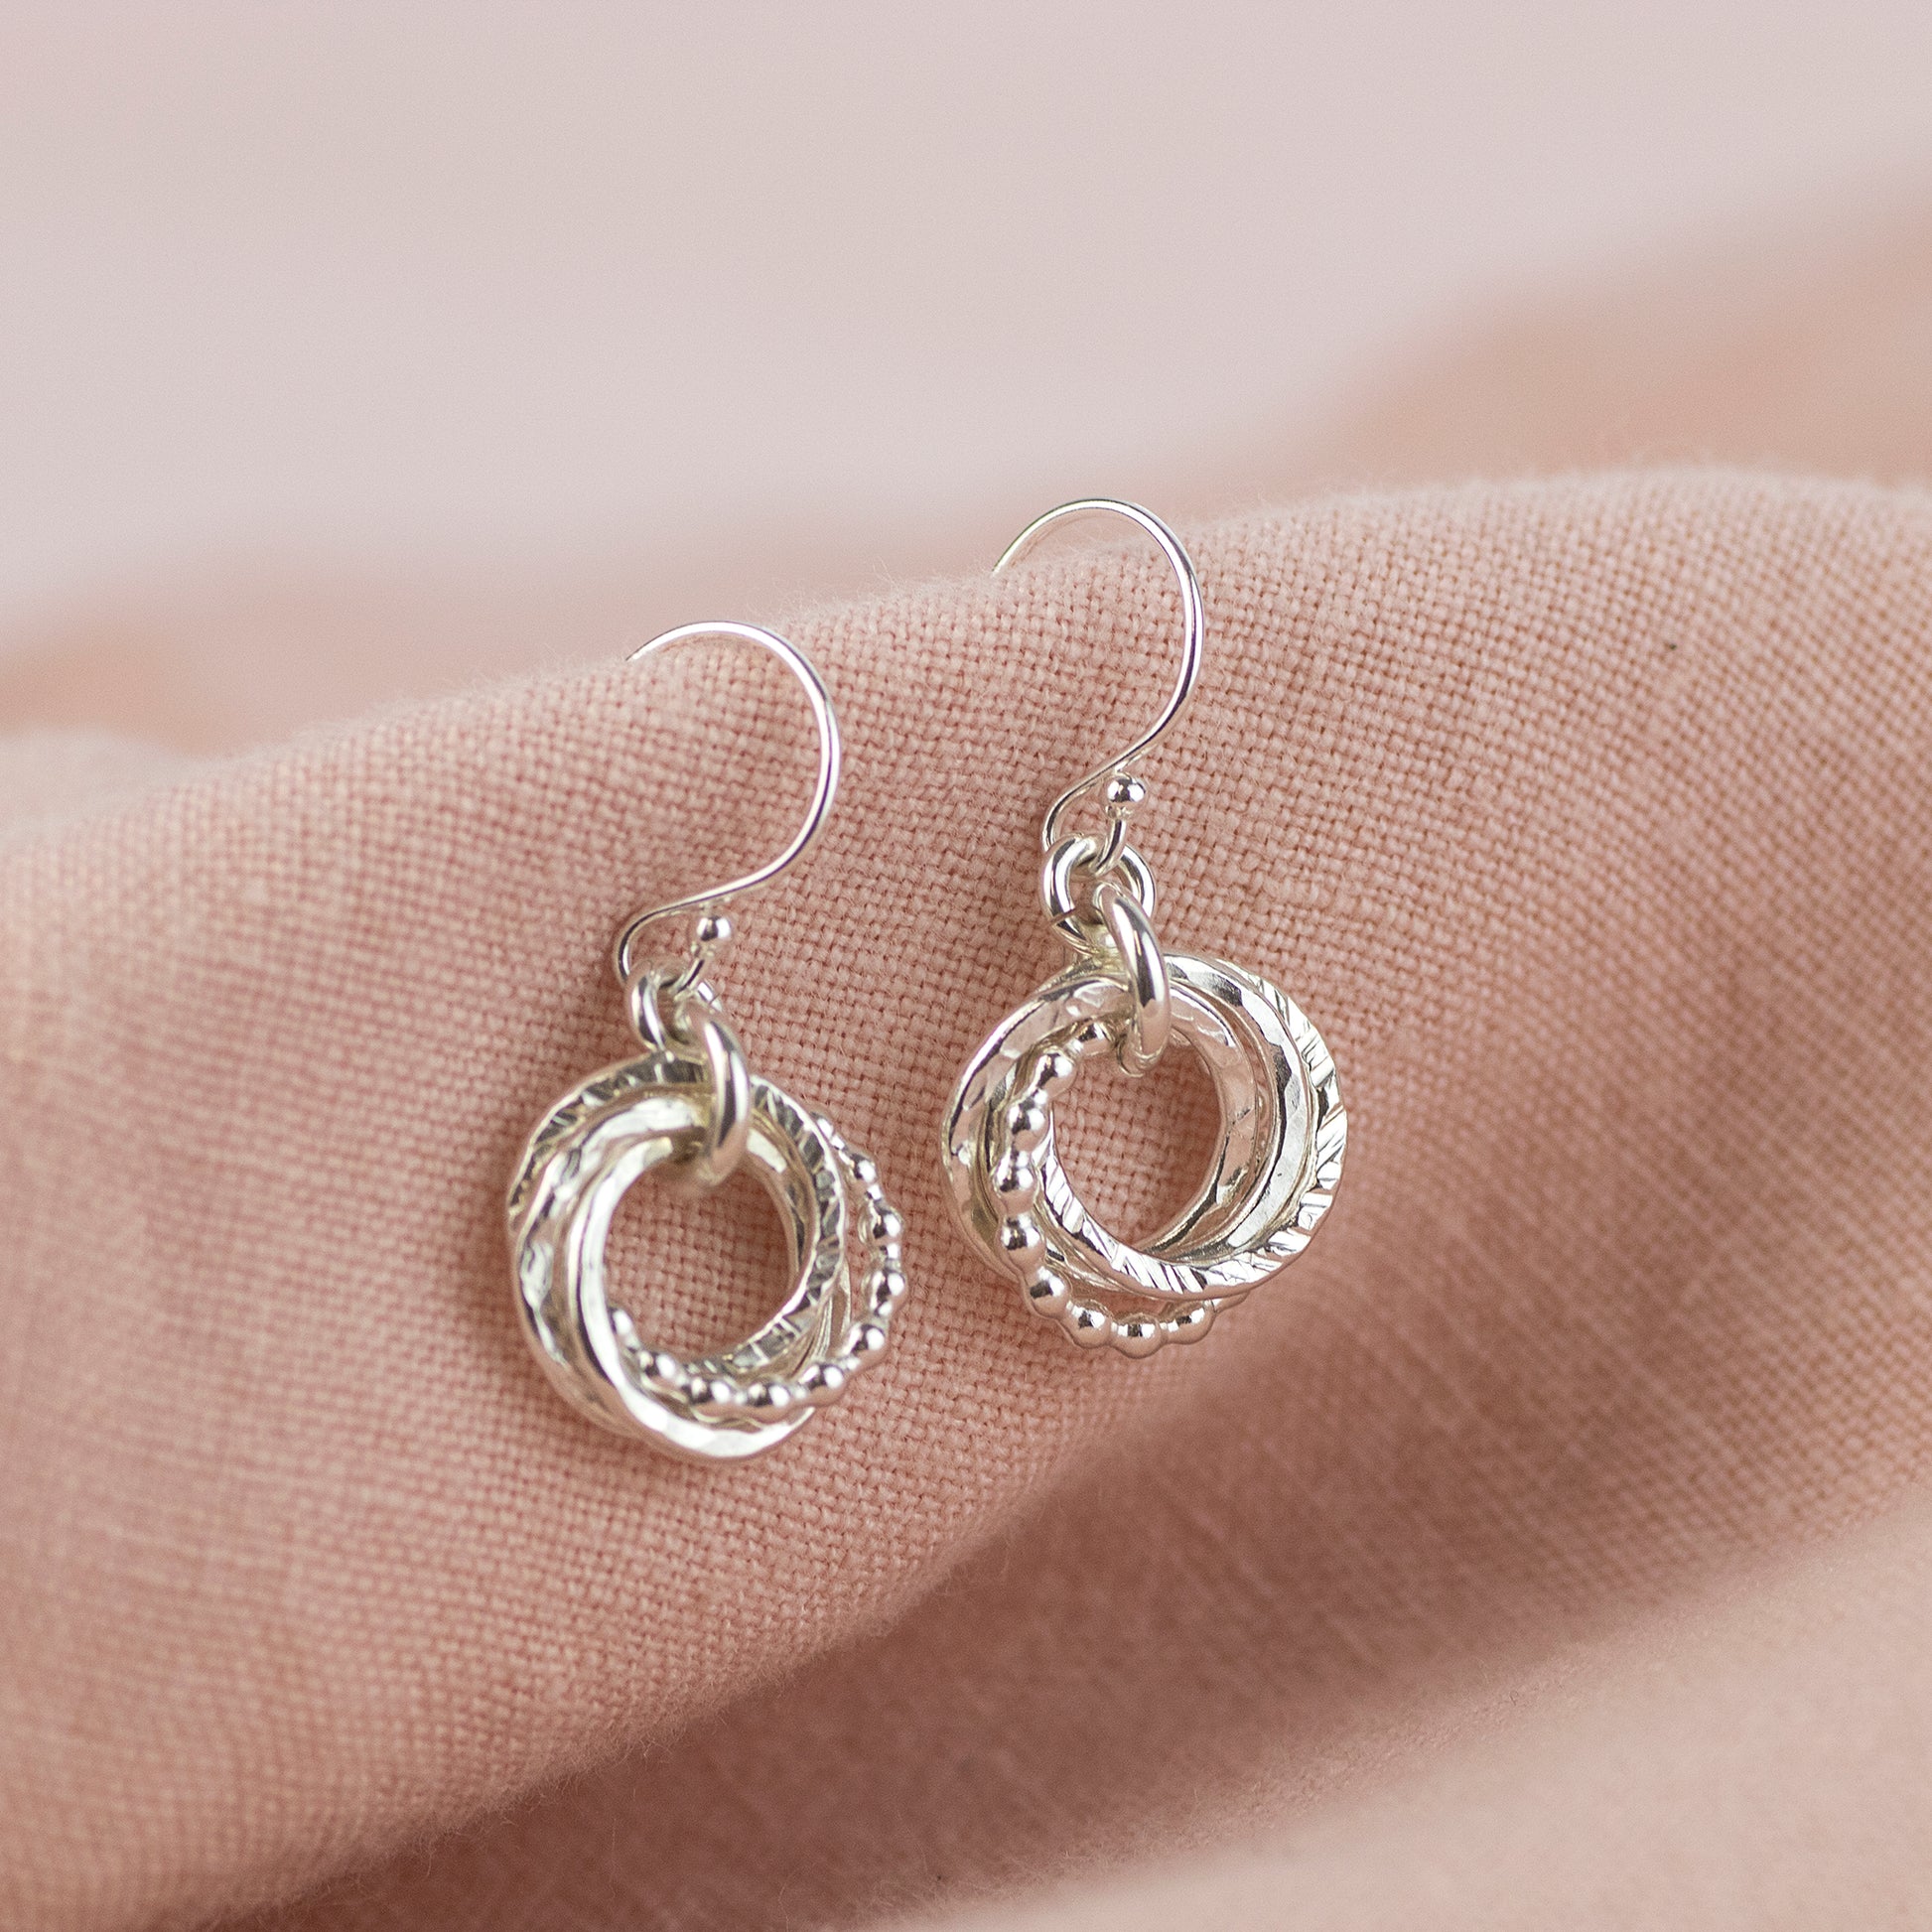 Sisters Earrings - 4 Sisters Linked for a Lifetime - Silver Love Knot Earrings